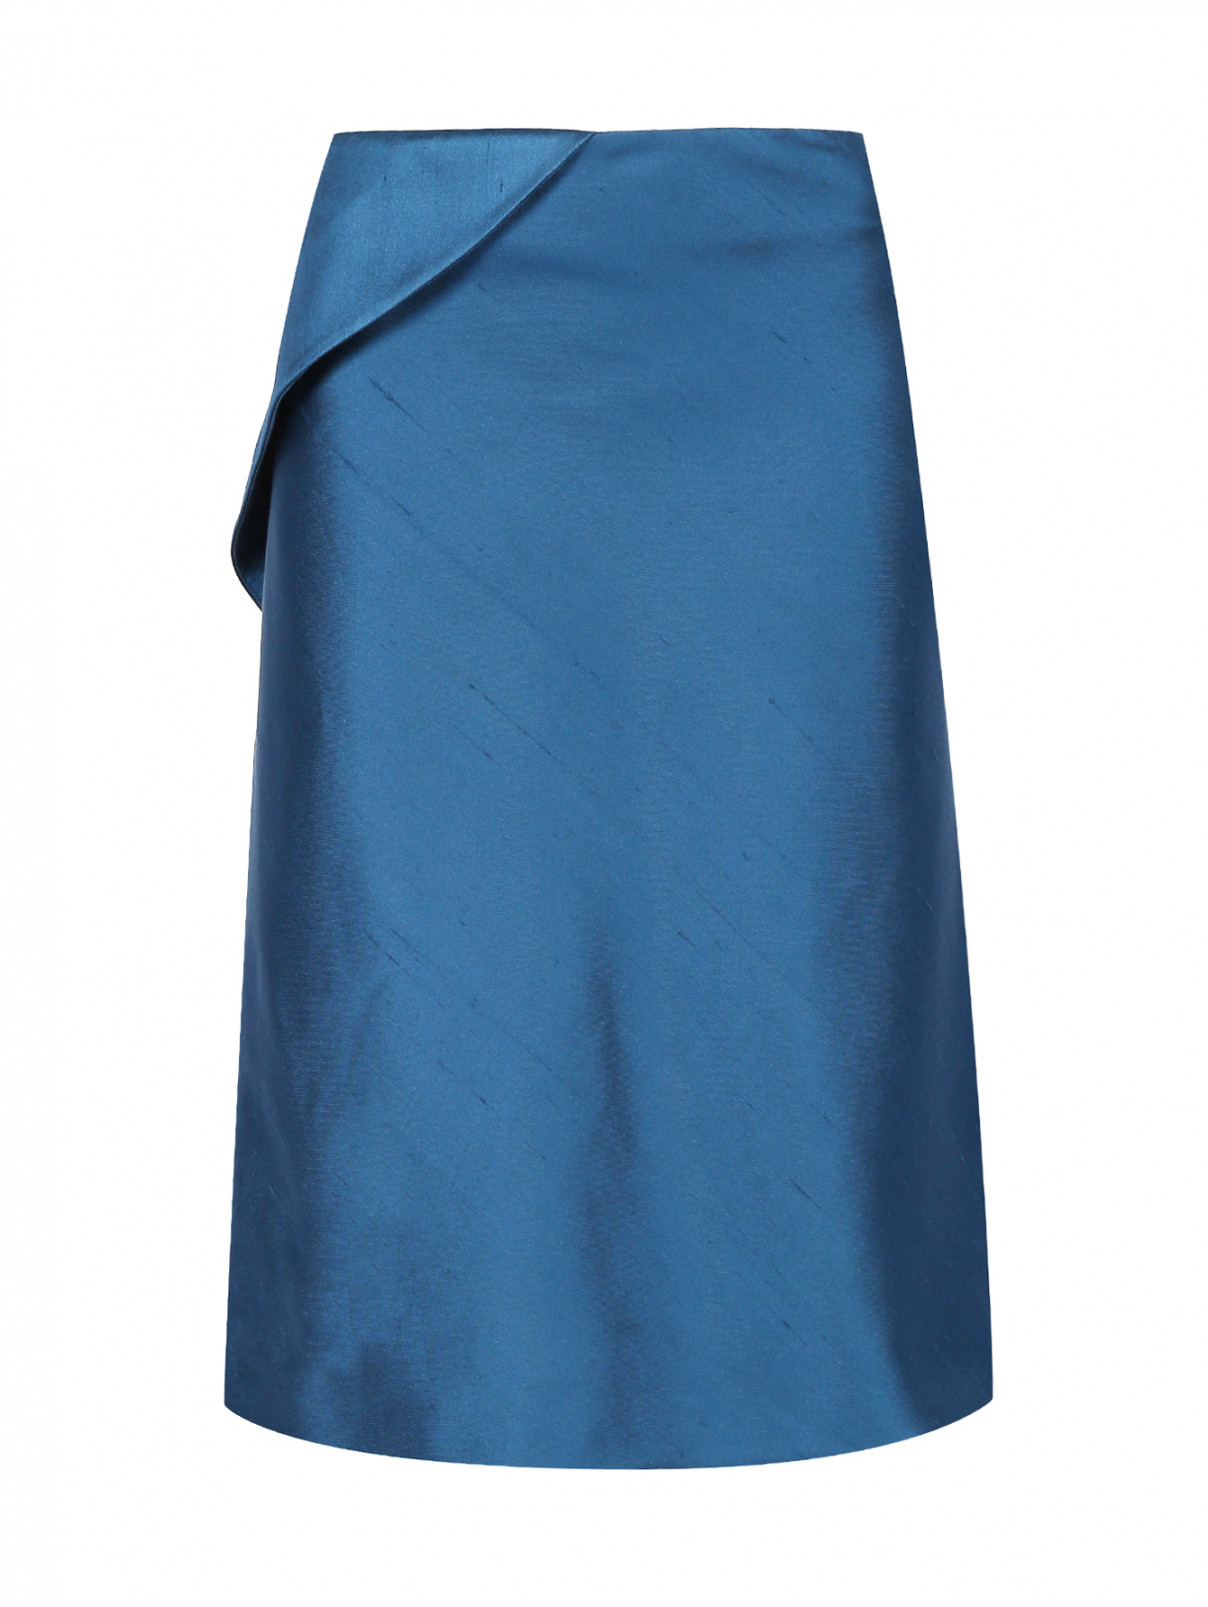 Юбка-миди из шелка и хлопка Alberta Ferretti  –  Общий вид  – Цвет:  Синий